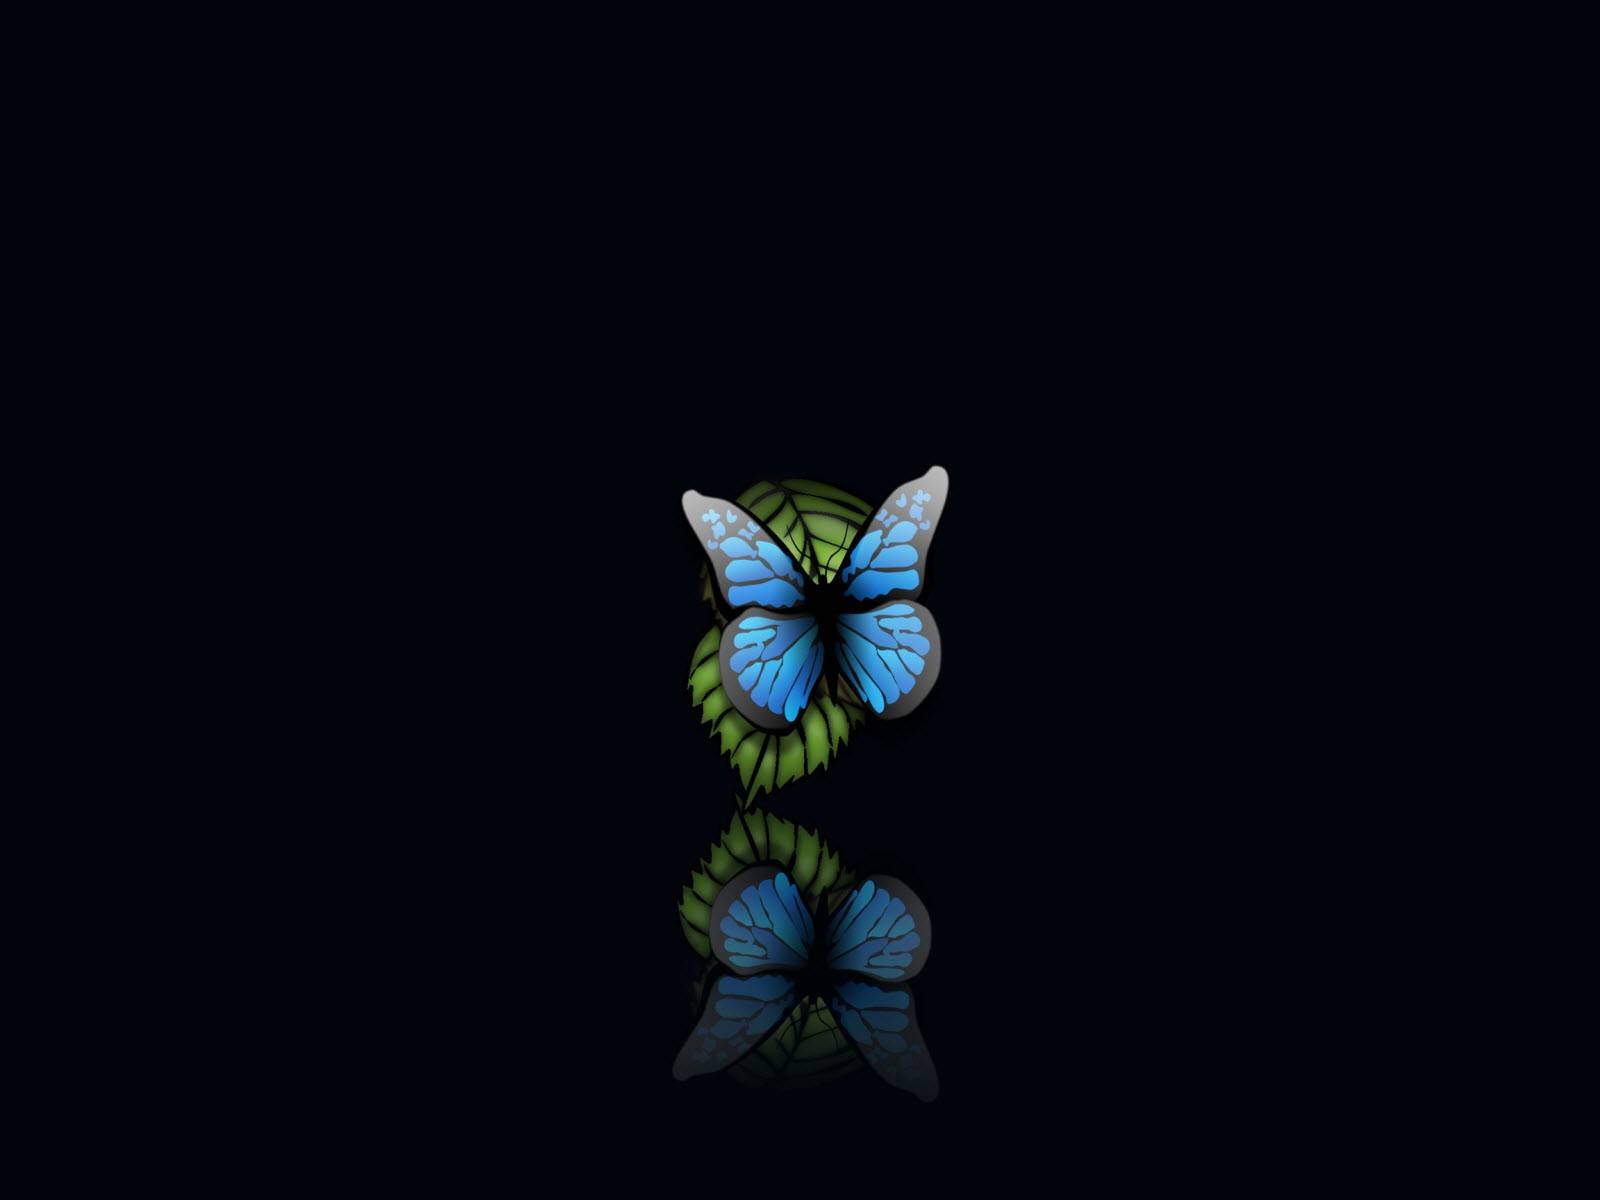 1391) Black Butterfly Image Wallpaper